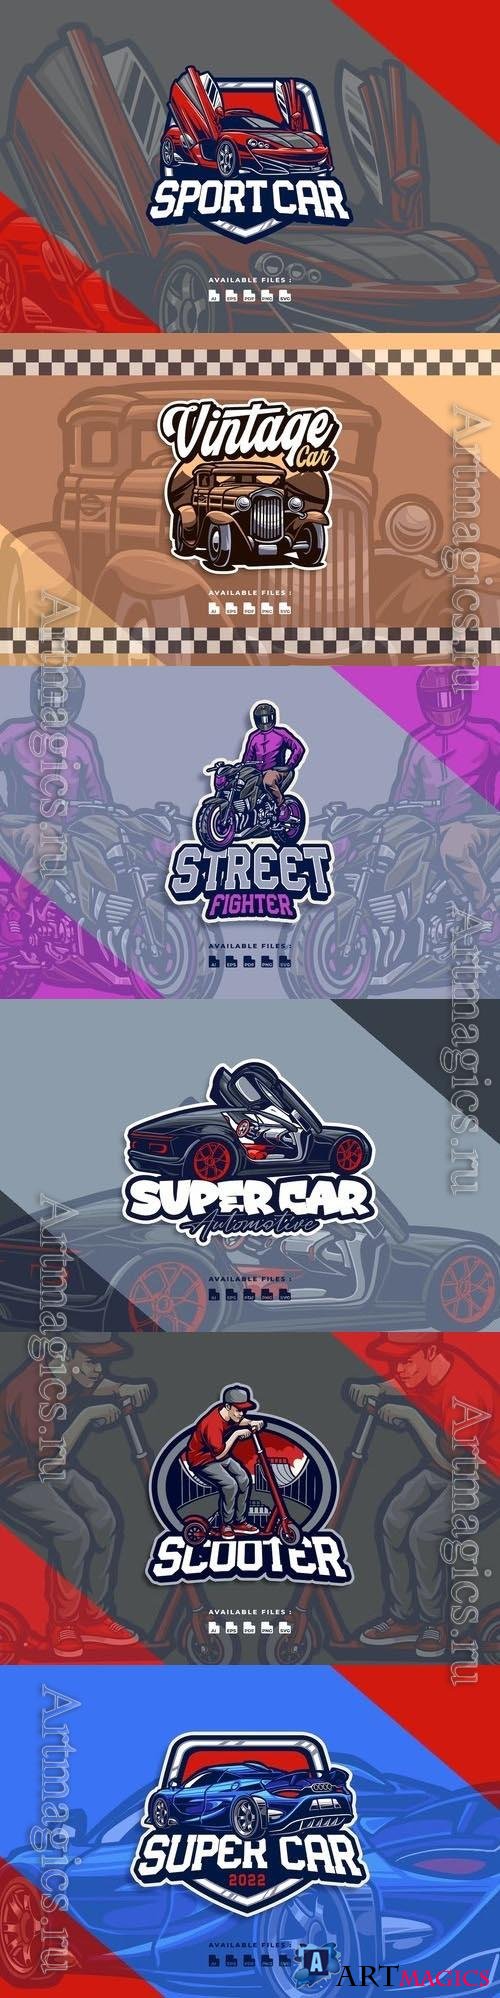 Super car, automotive transportation, motorcycle, scooter logo